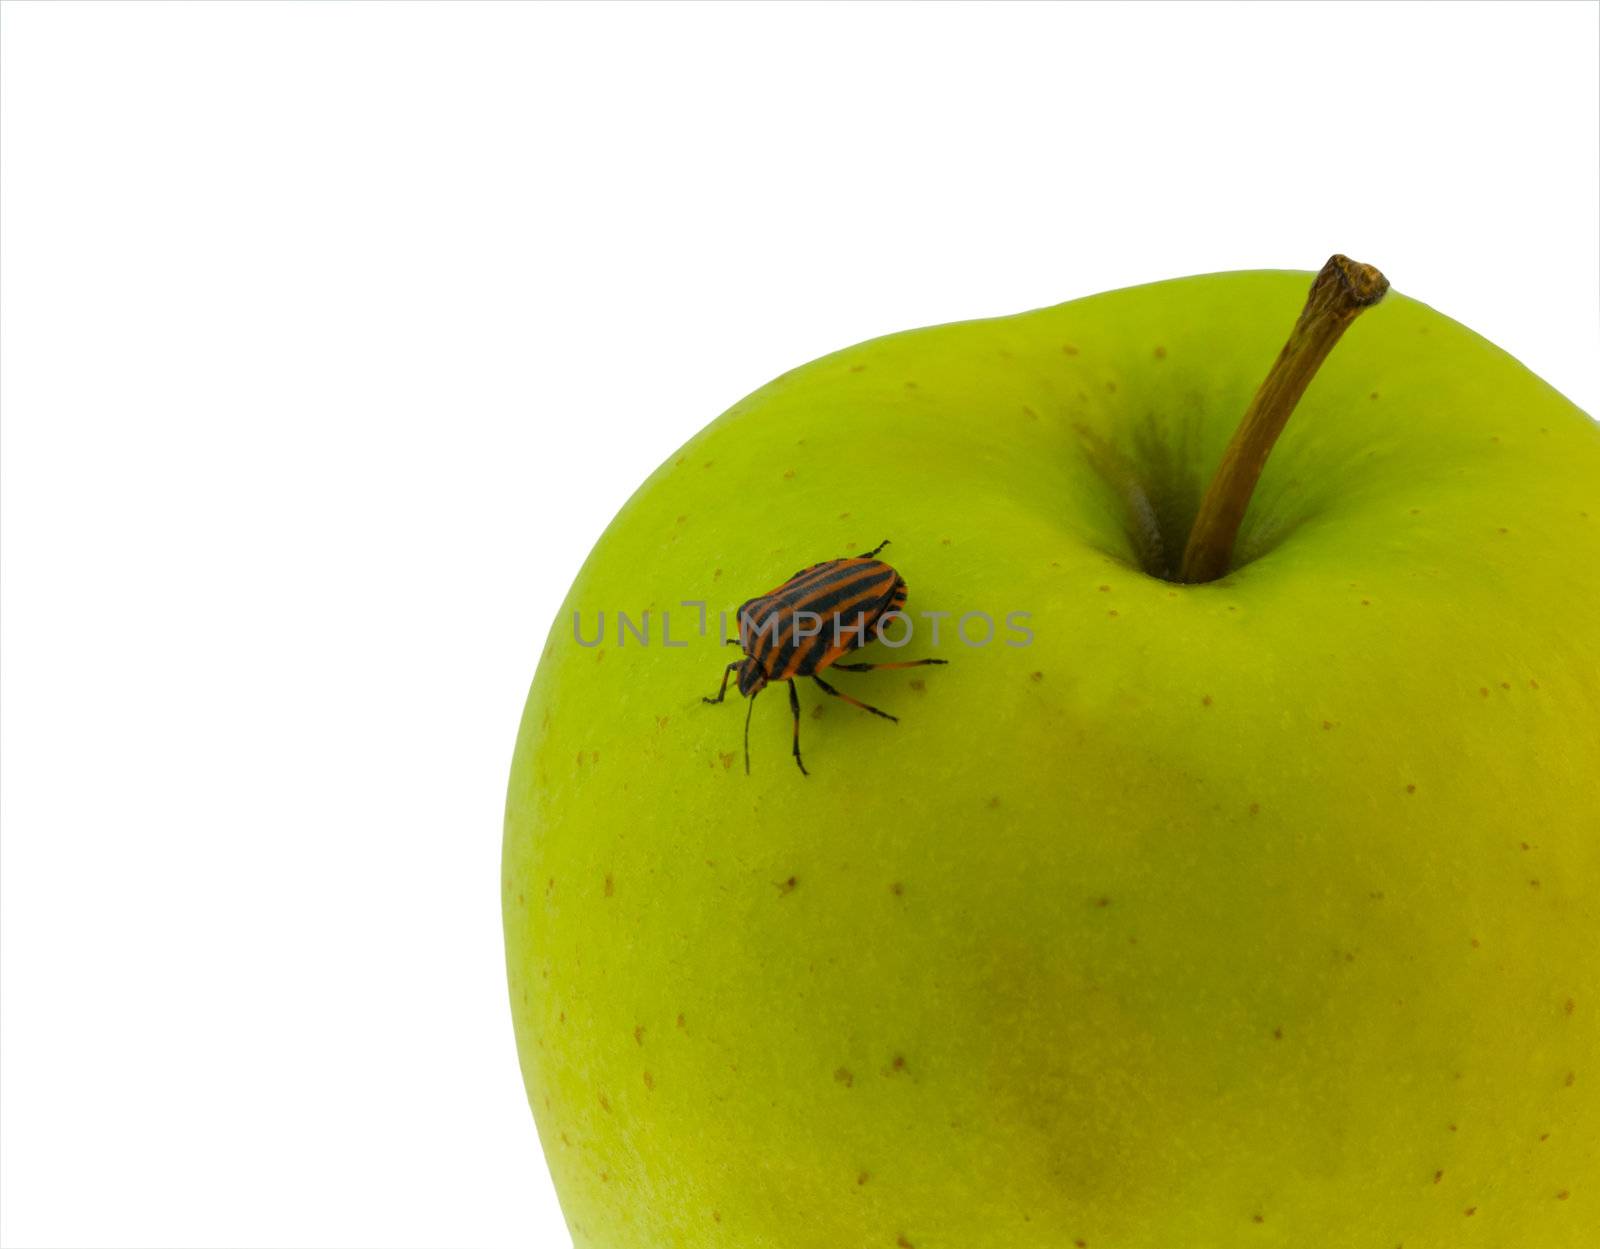 Forest-bug & apple